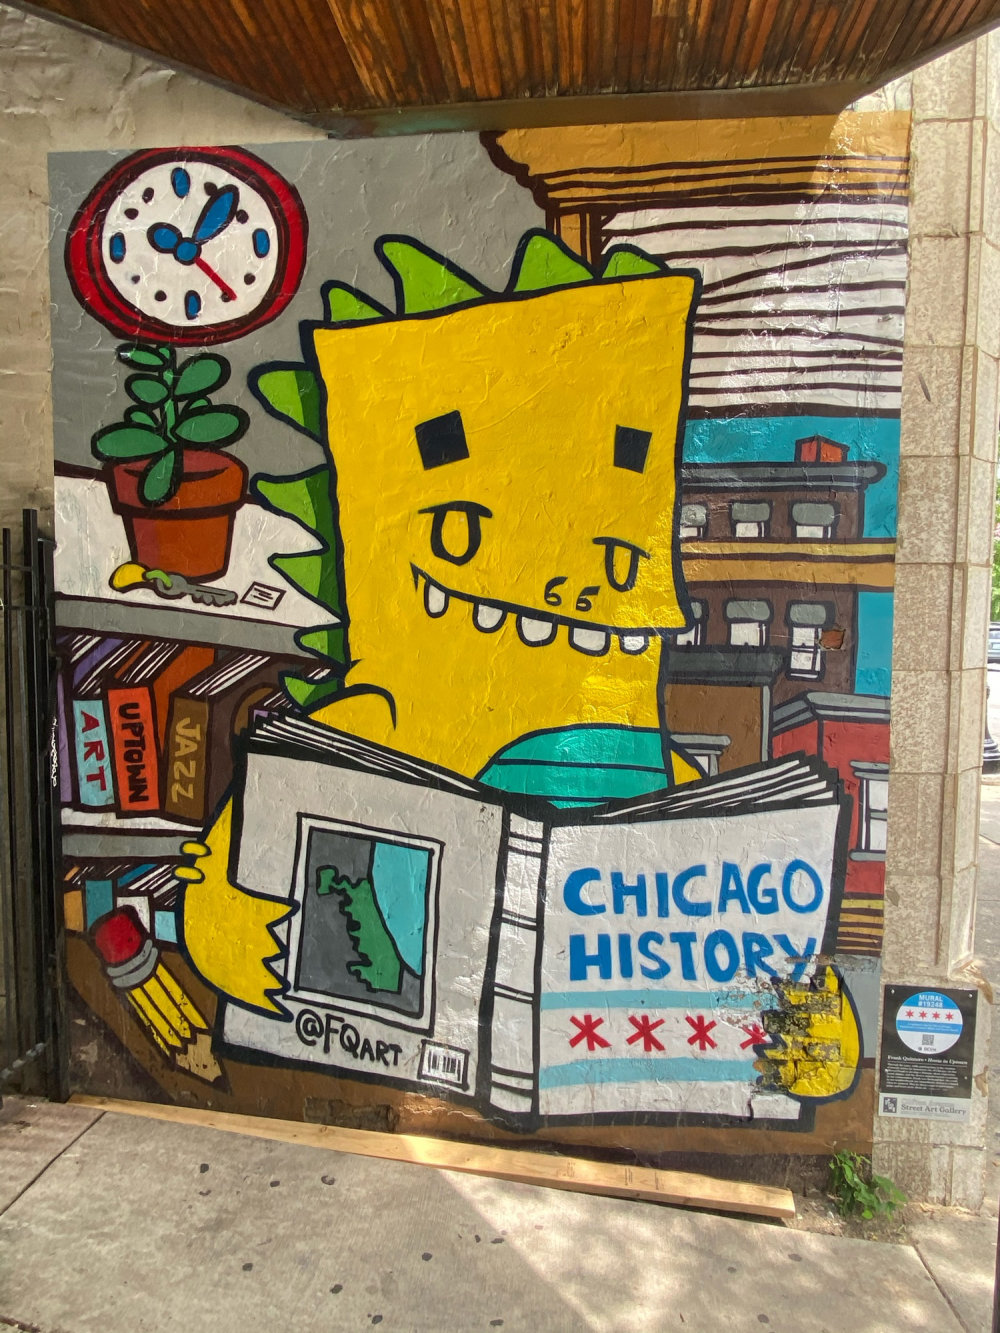 mural in Chicago by artist FQart.